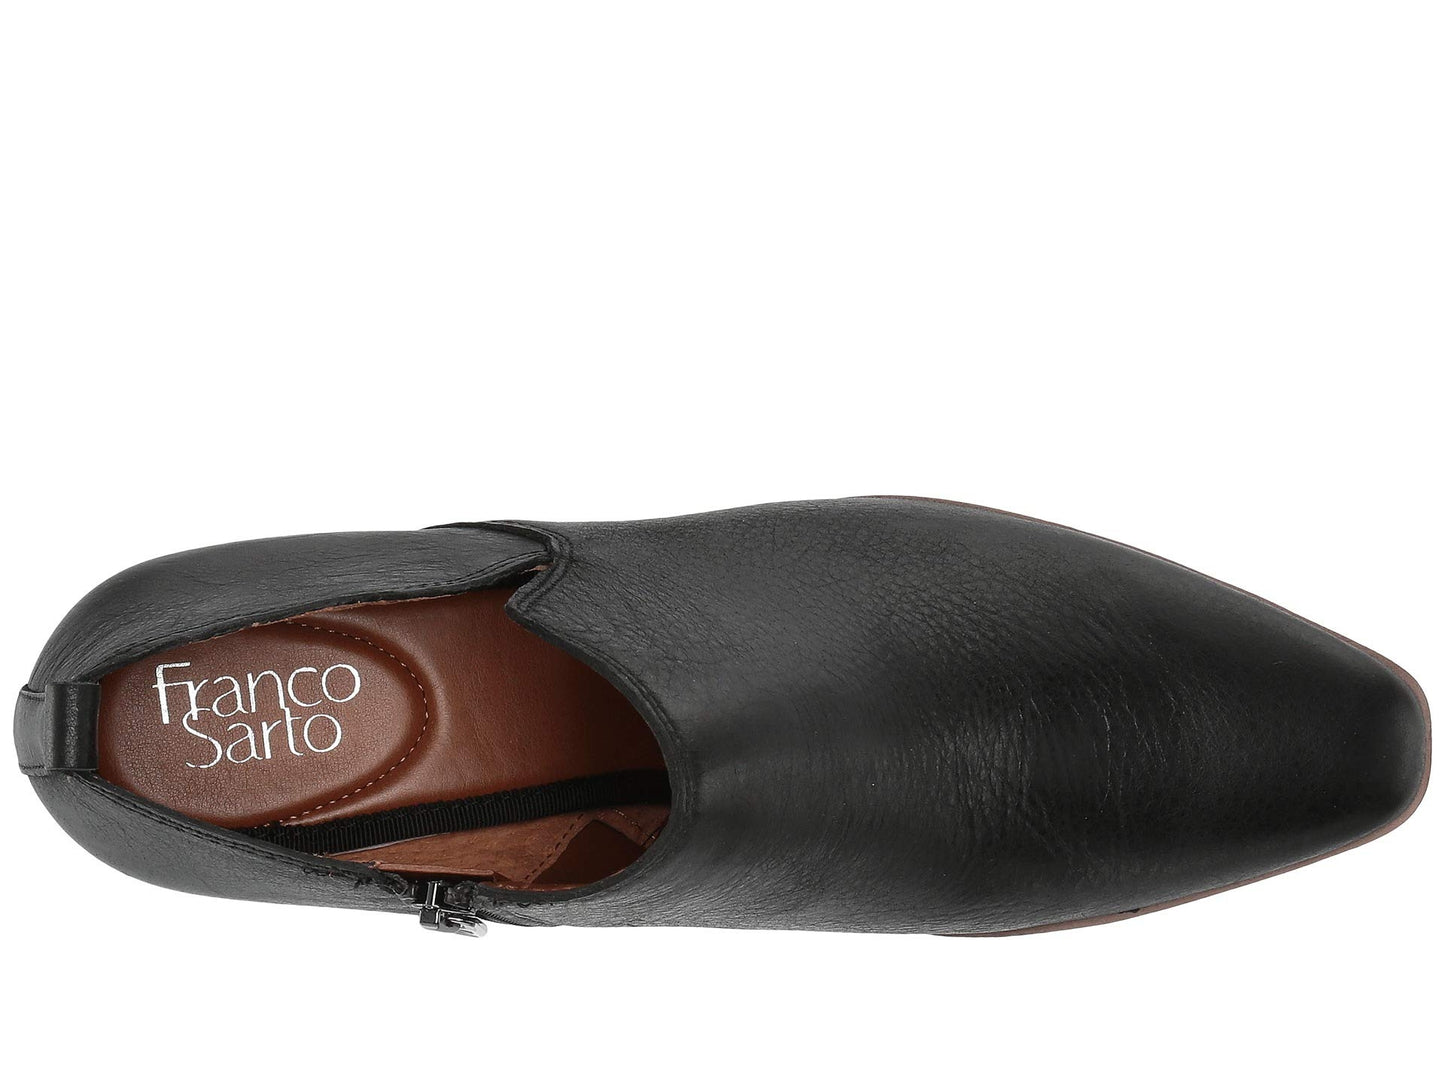 Dingo Black Leather Franco Sarto Ankle Boots